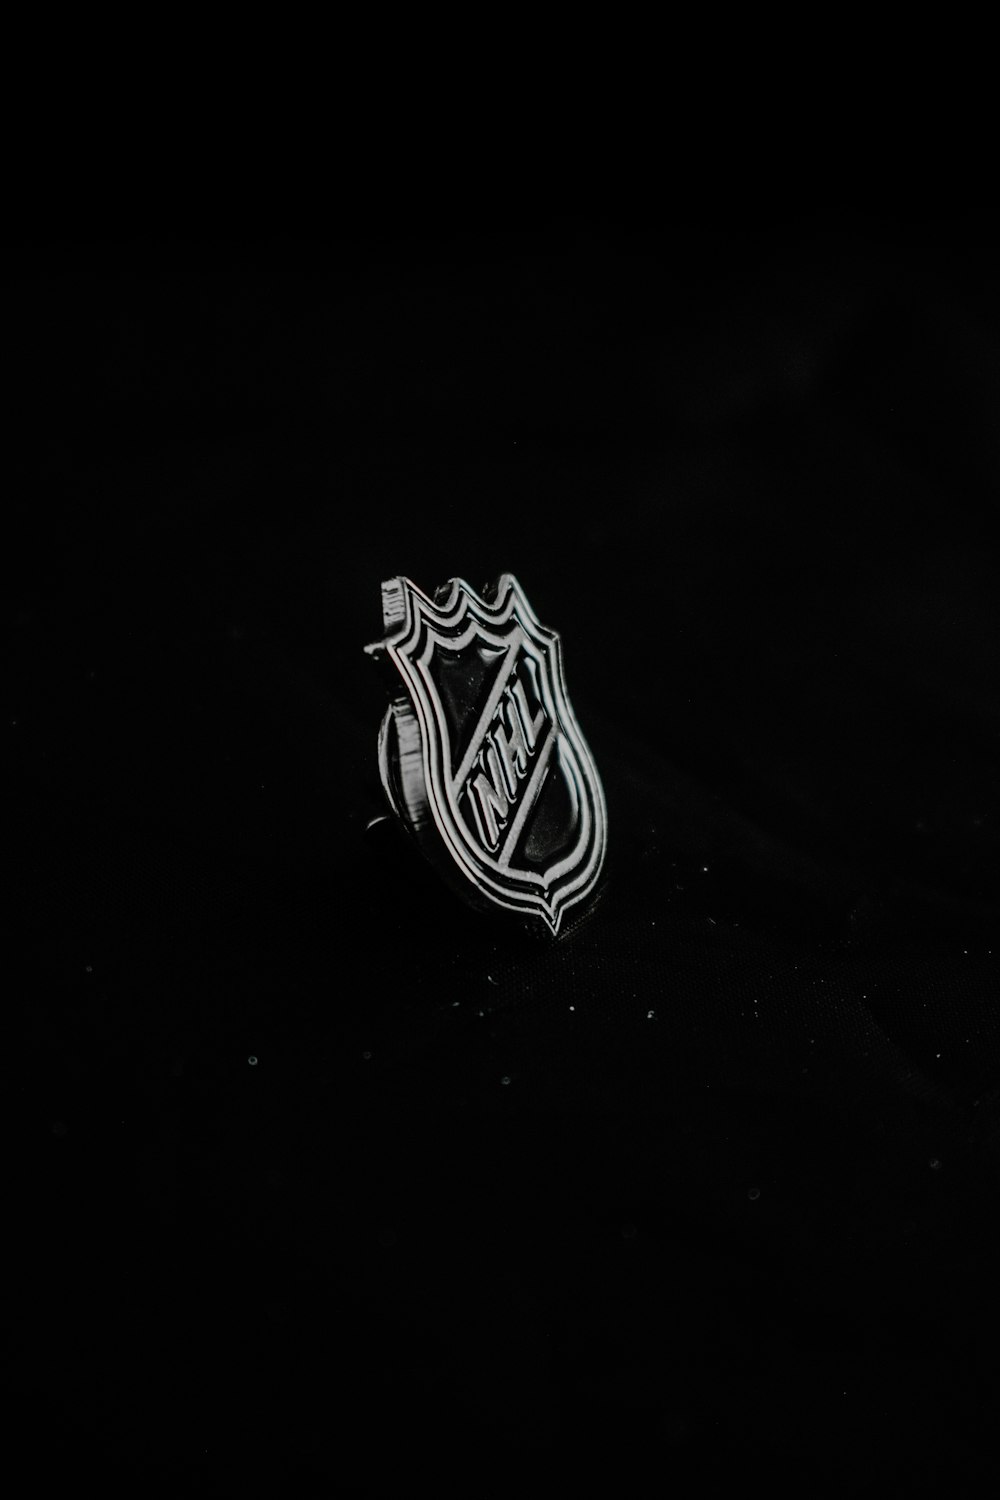 a close up of a hockey logo on a black background